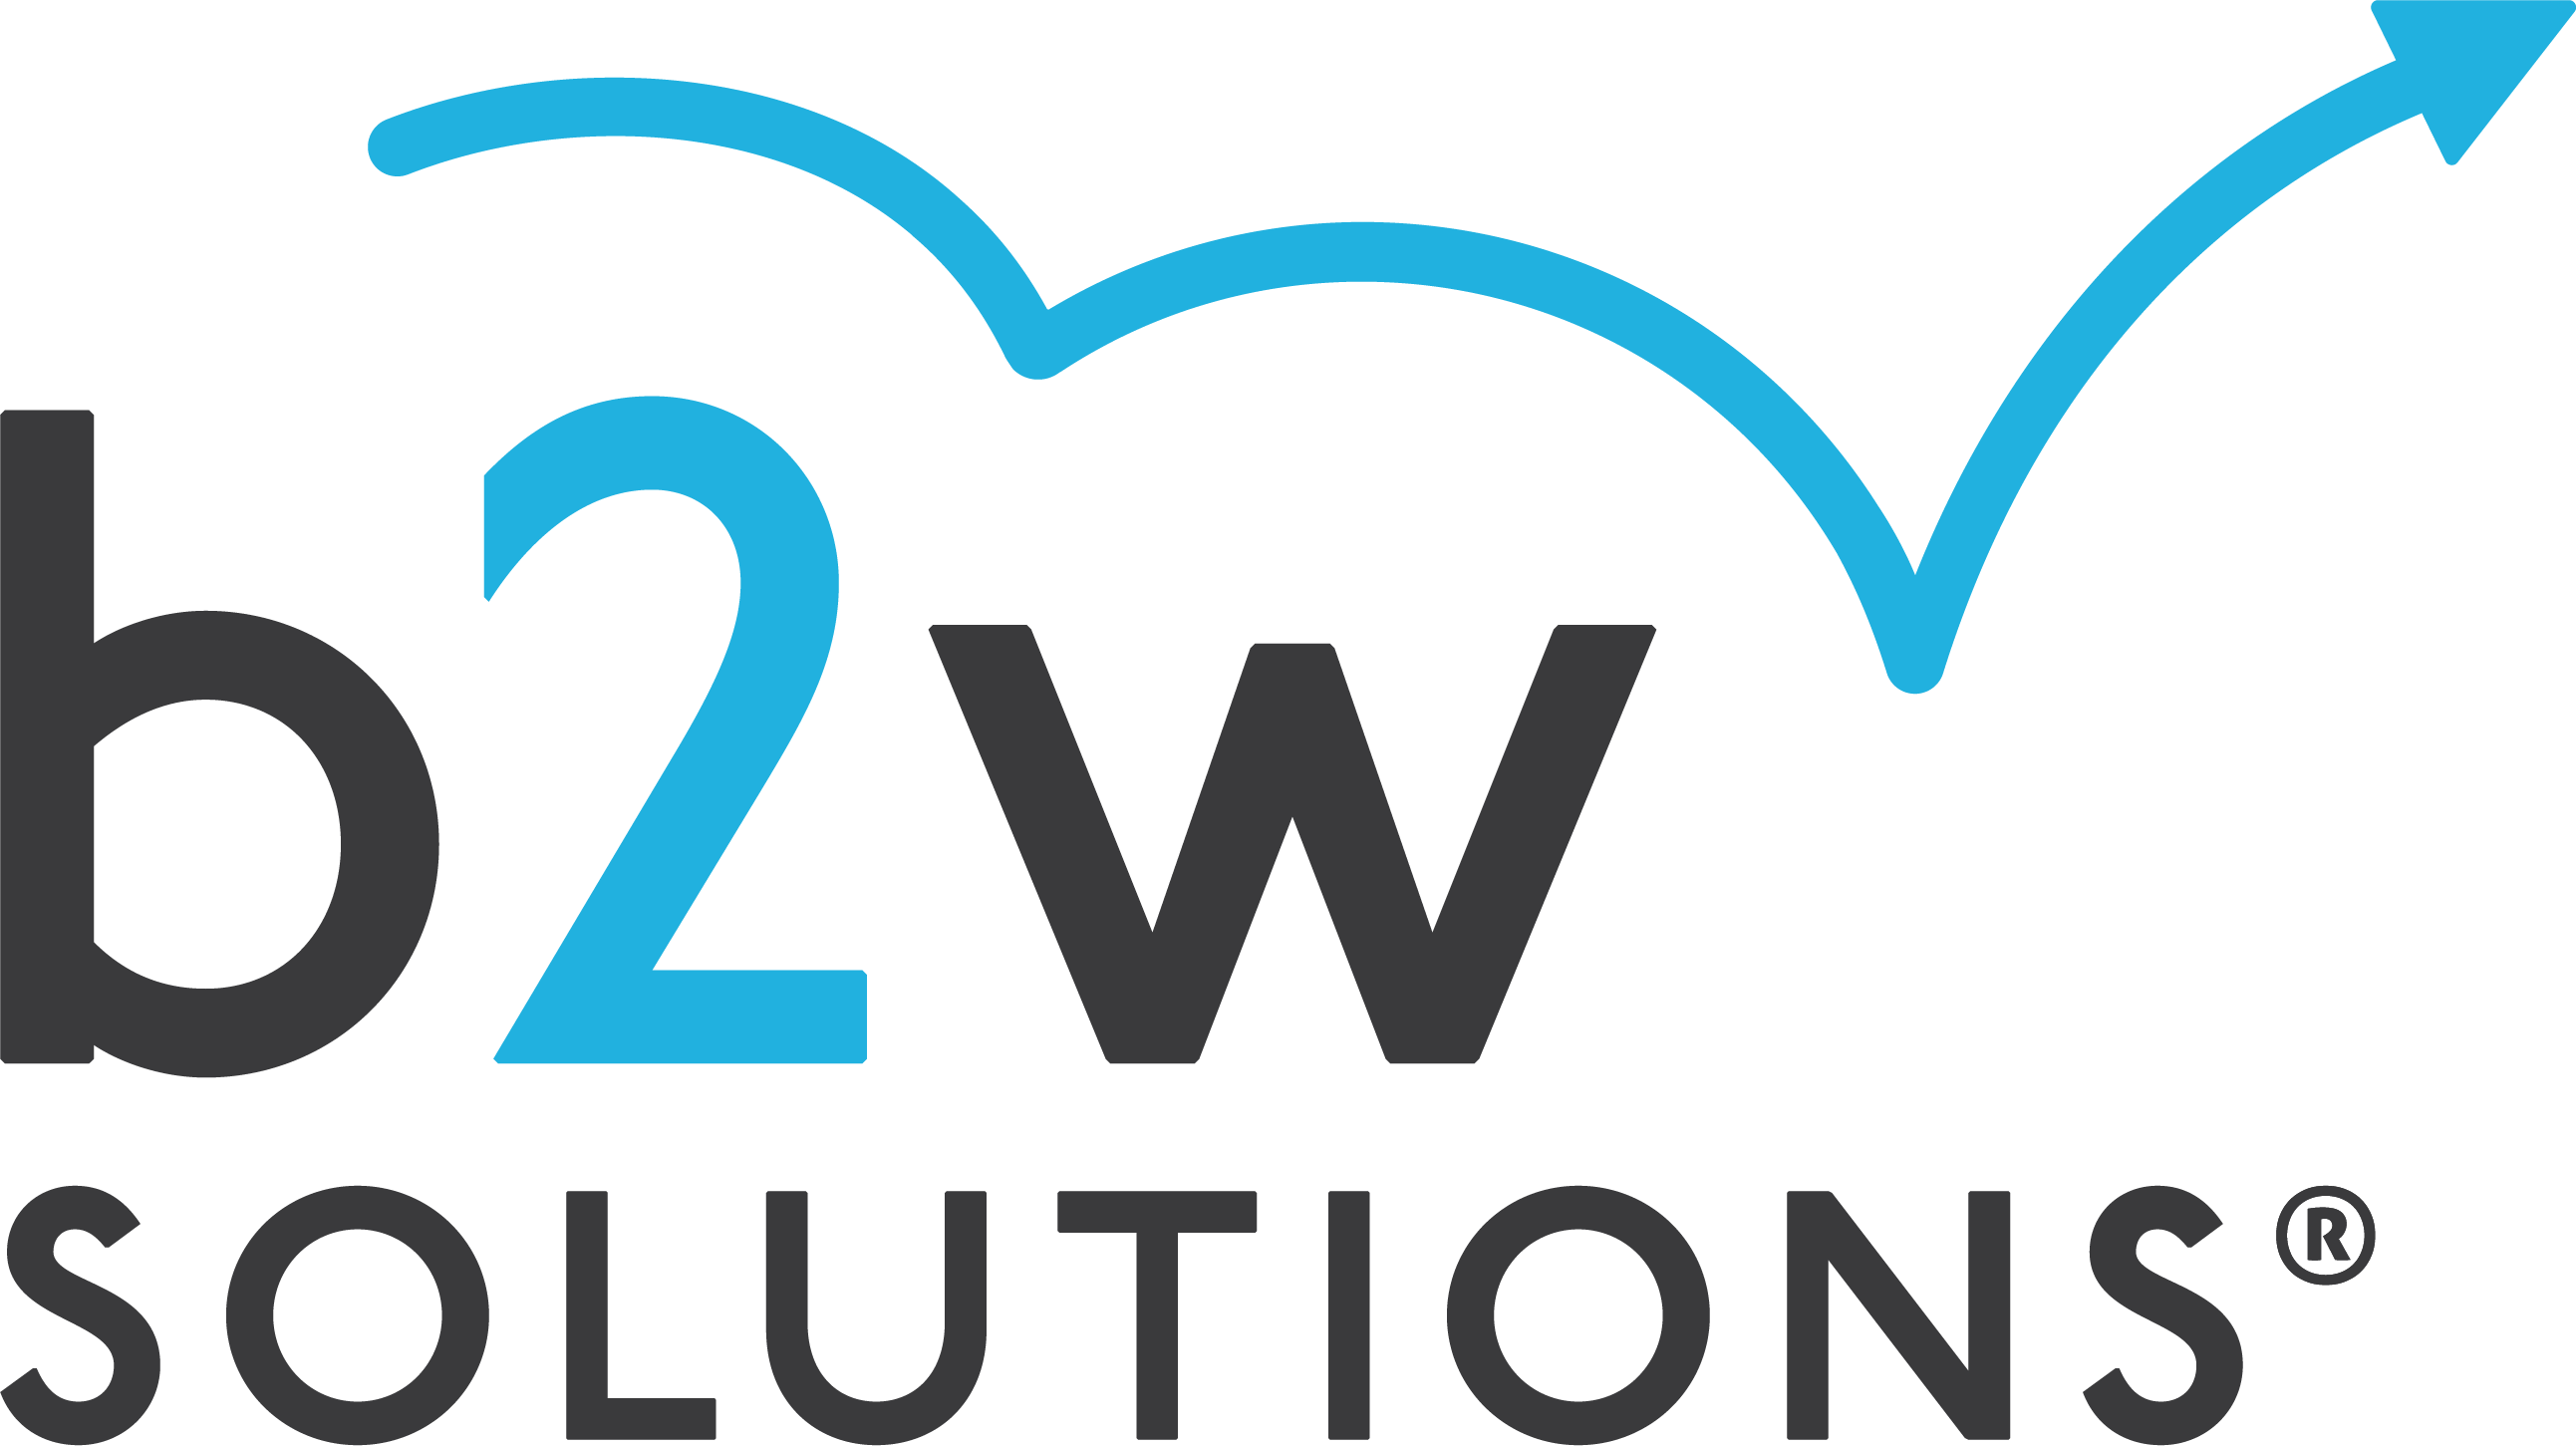 B2W Solutions logo